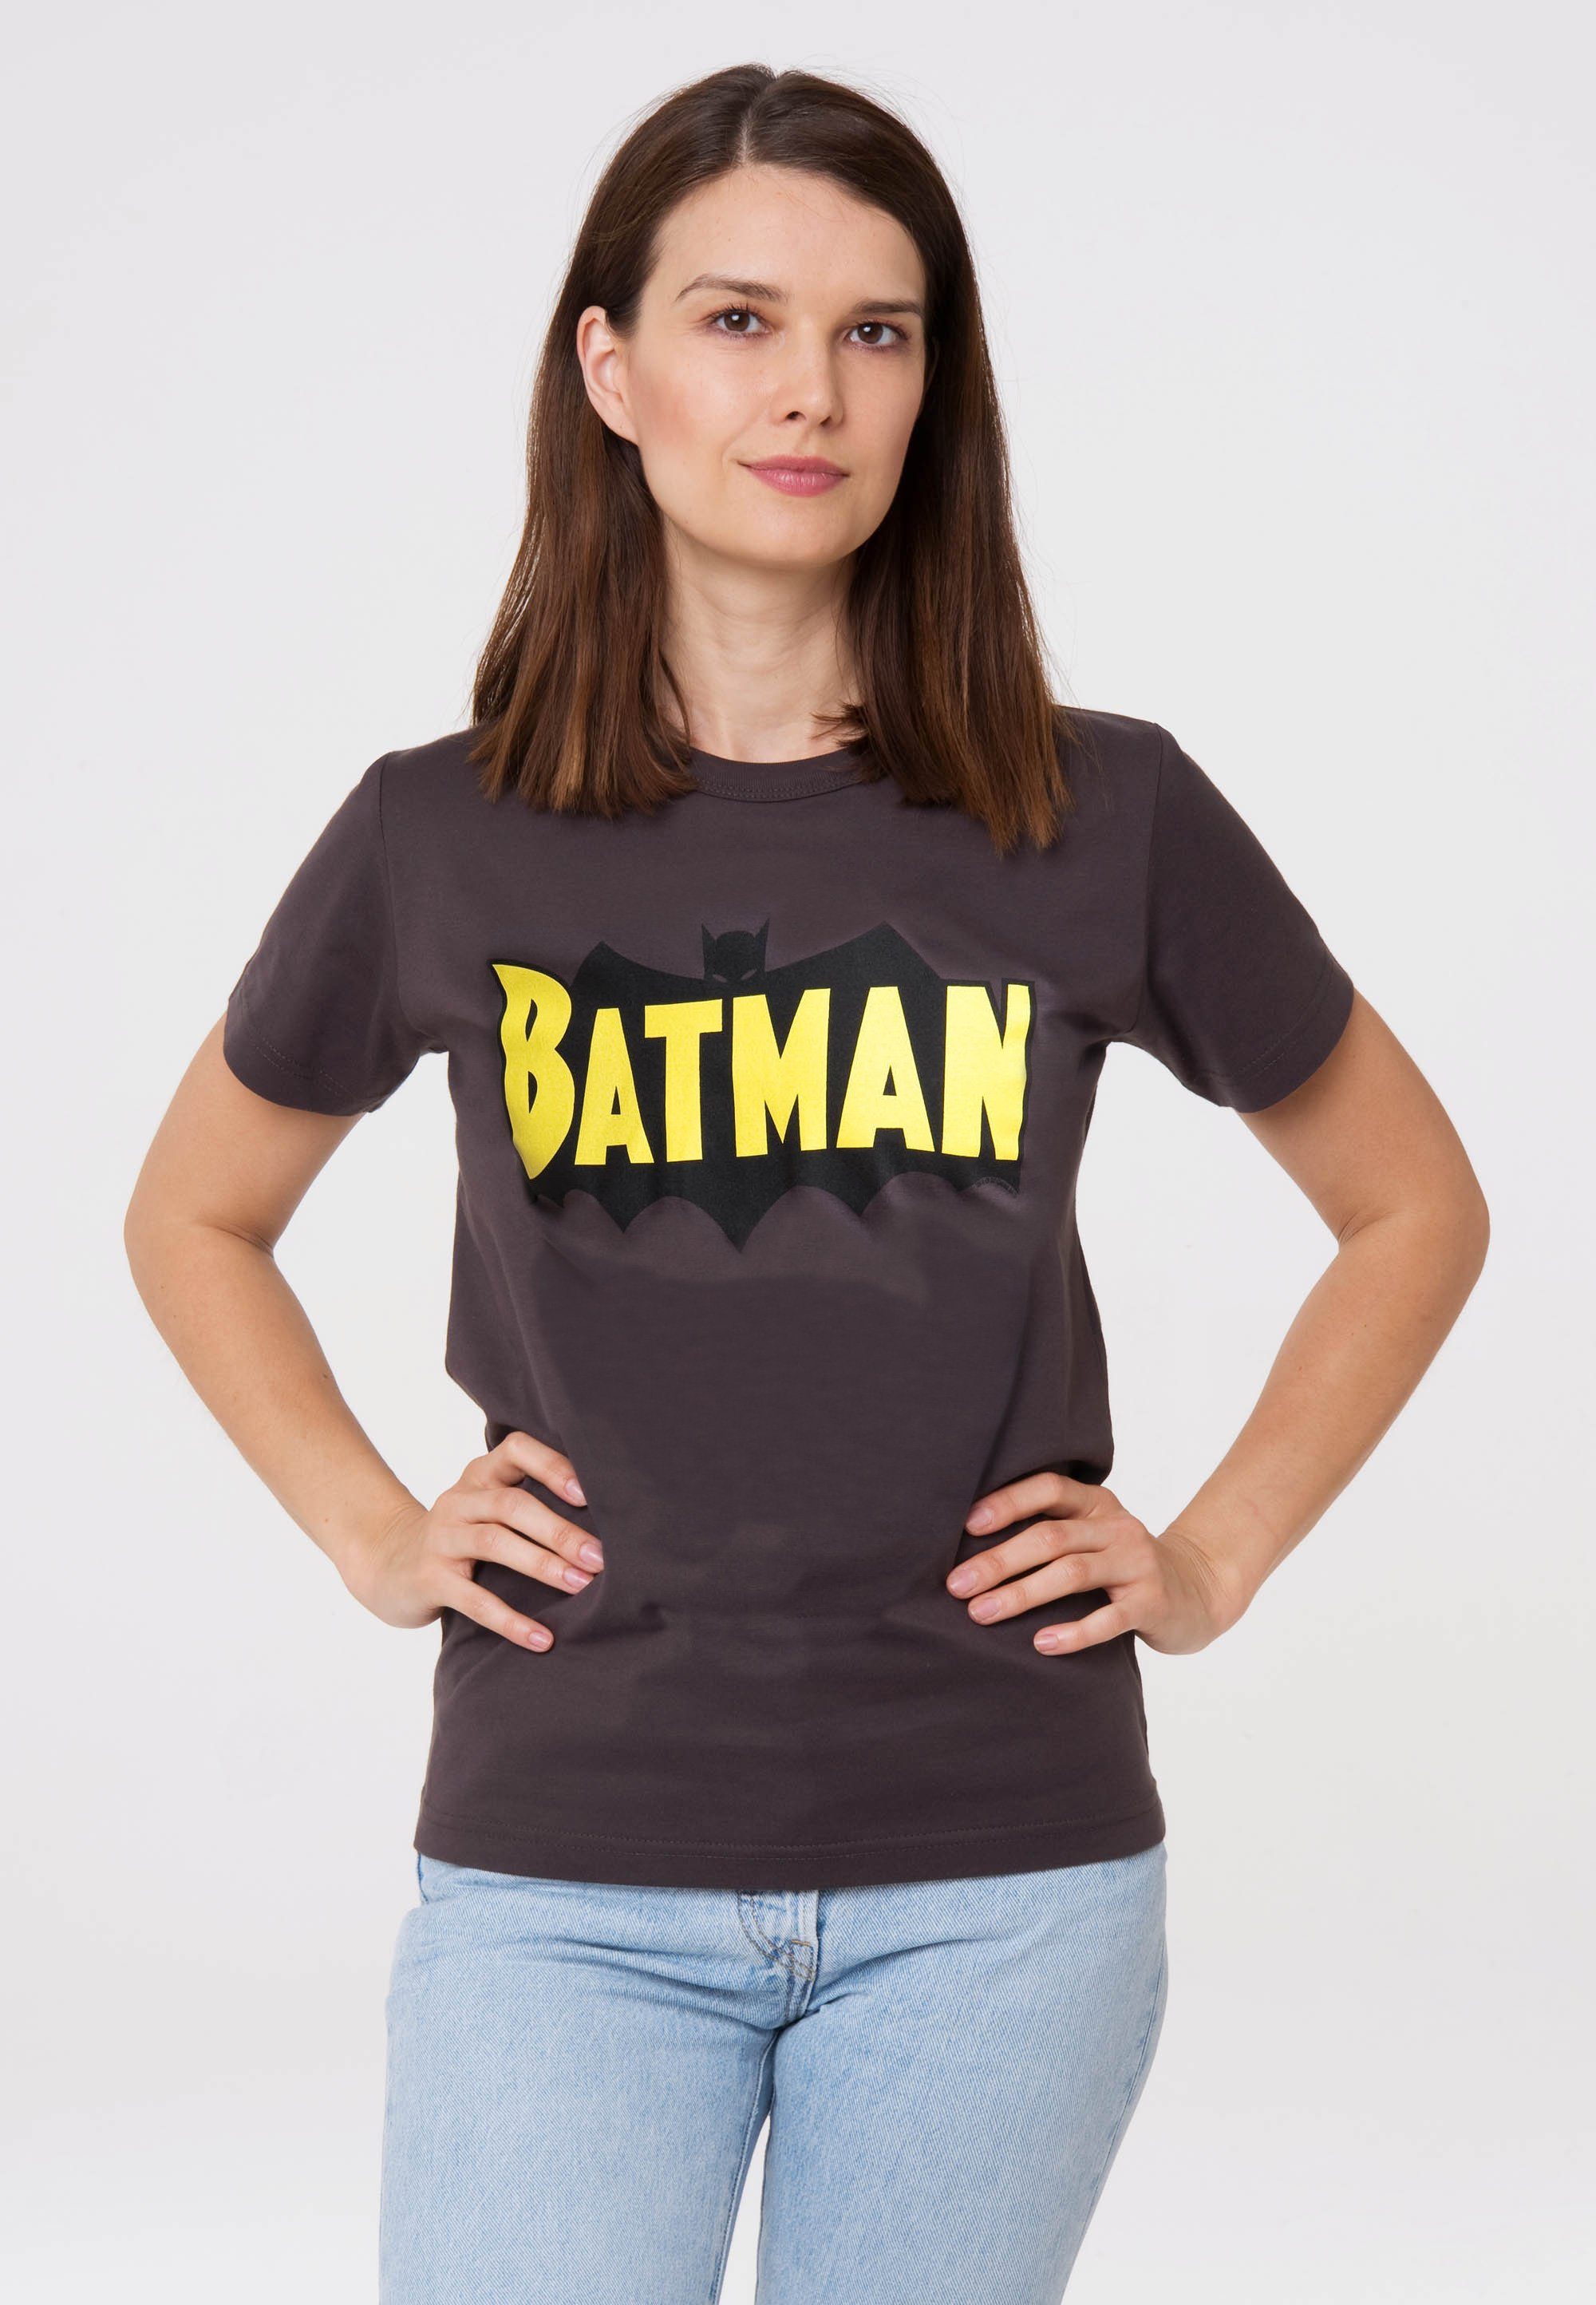 Trendiges T-Shirt Damen Wings Logoshirt von Batman Batman für Wings trendigem LOGOSHIRT Superhelden-Print, T-Shirt mit